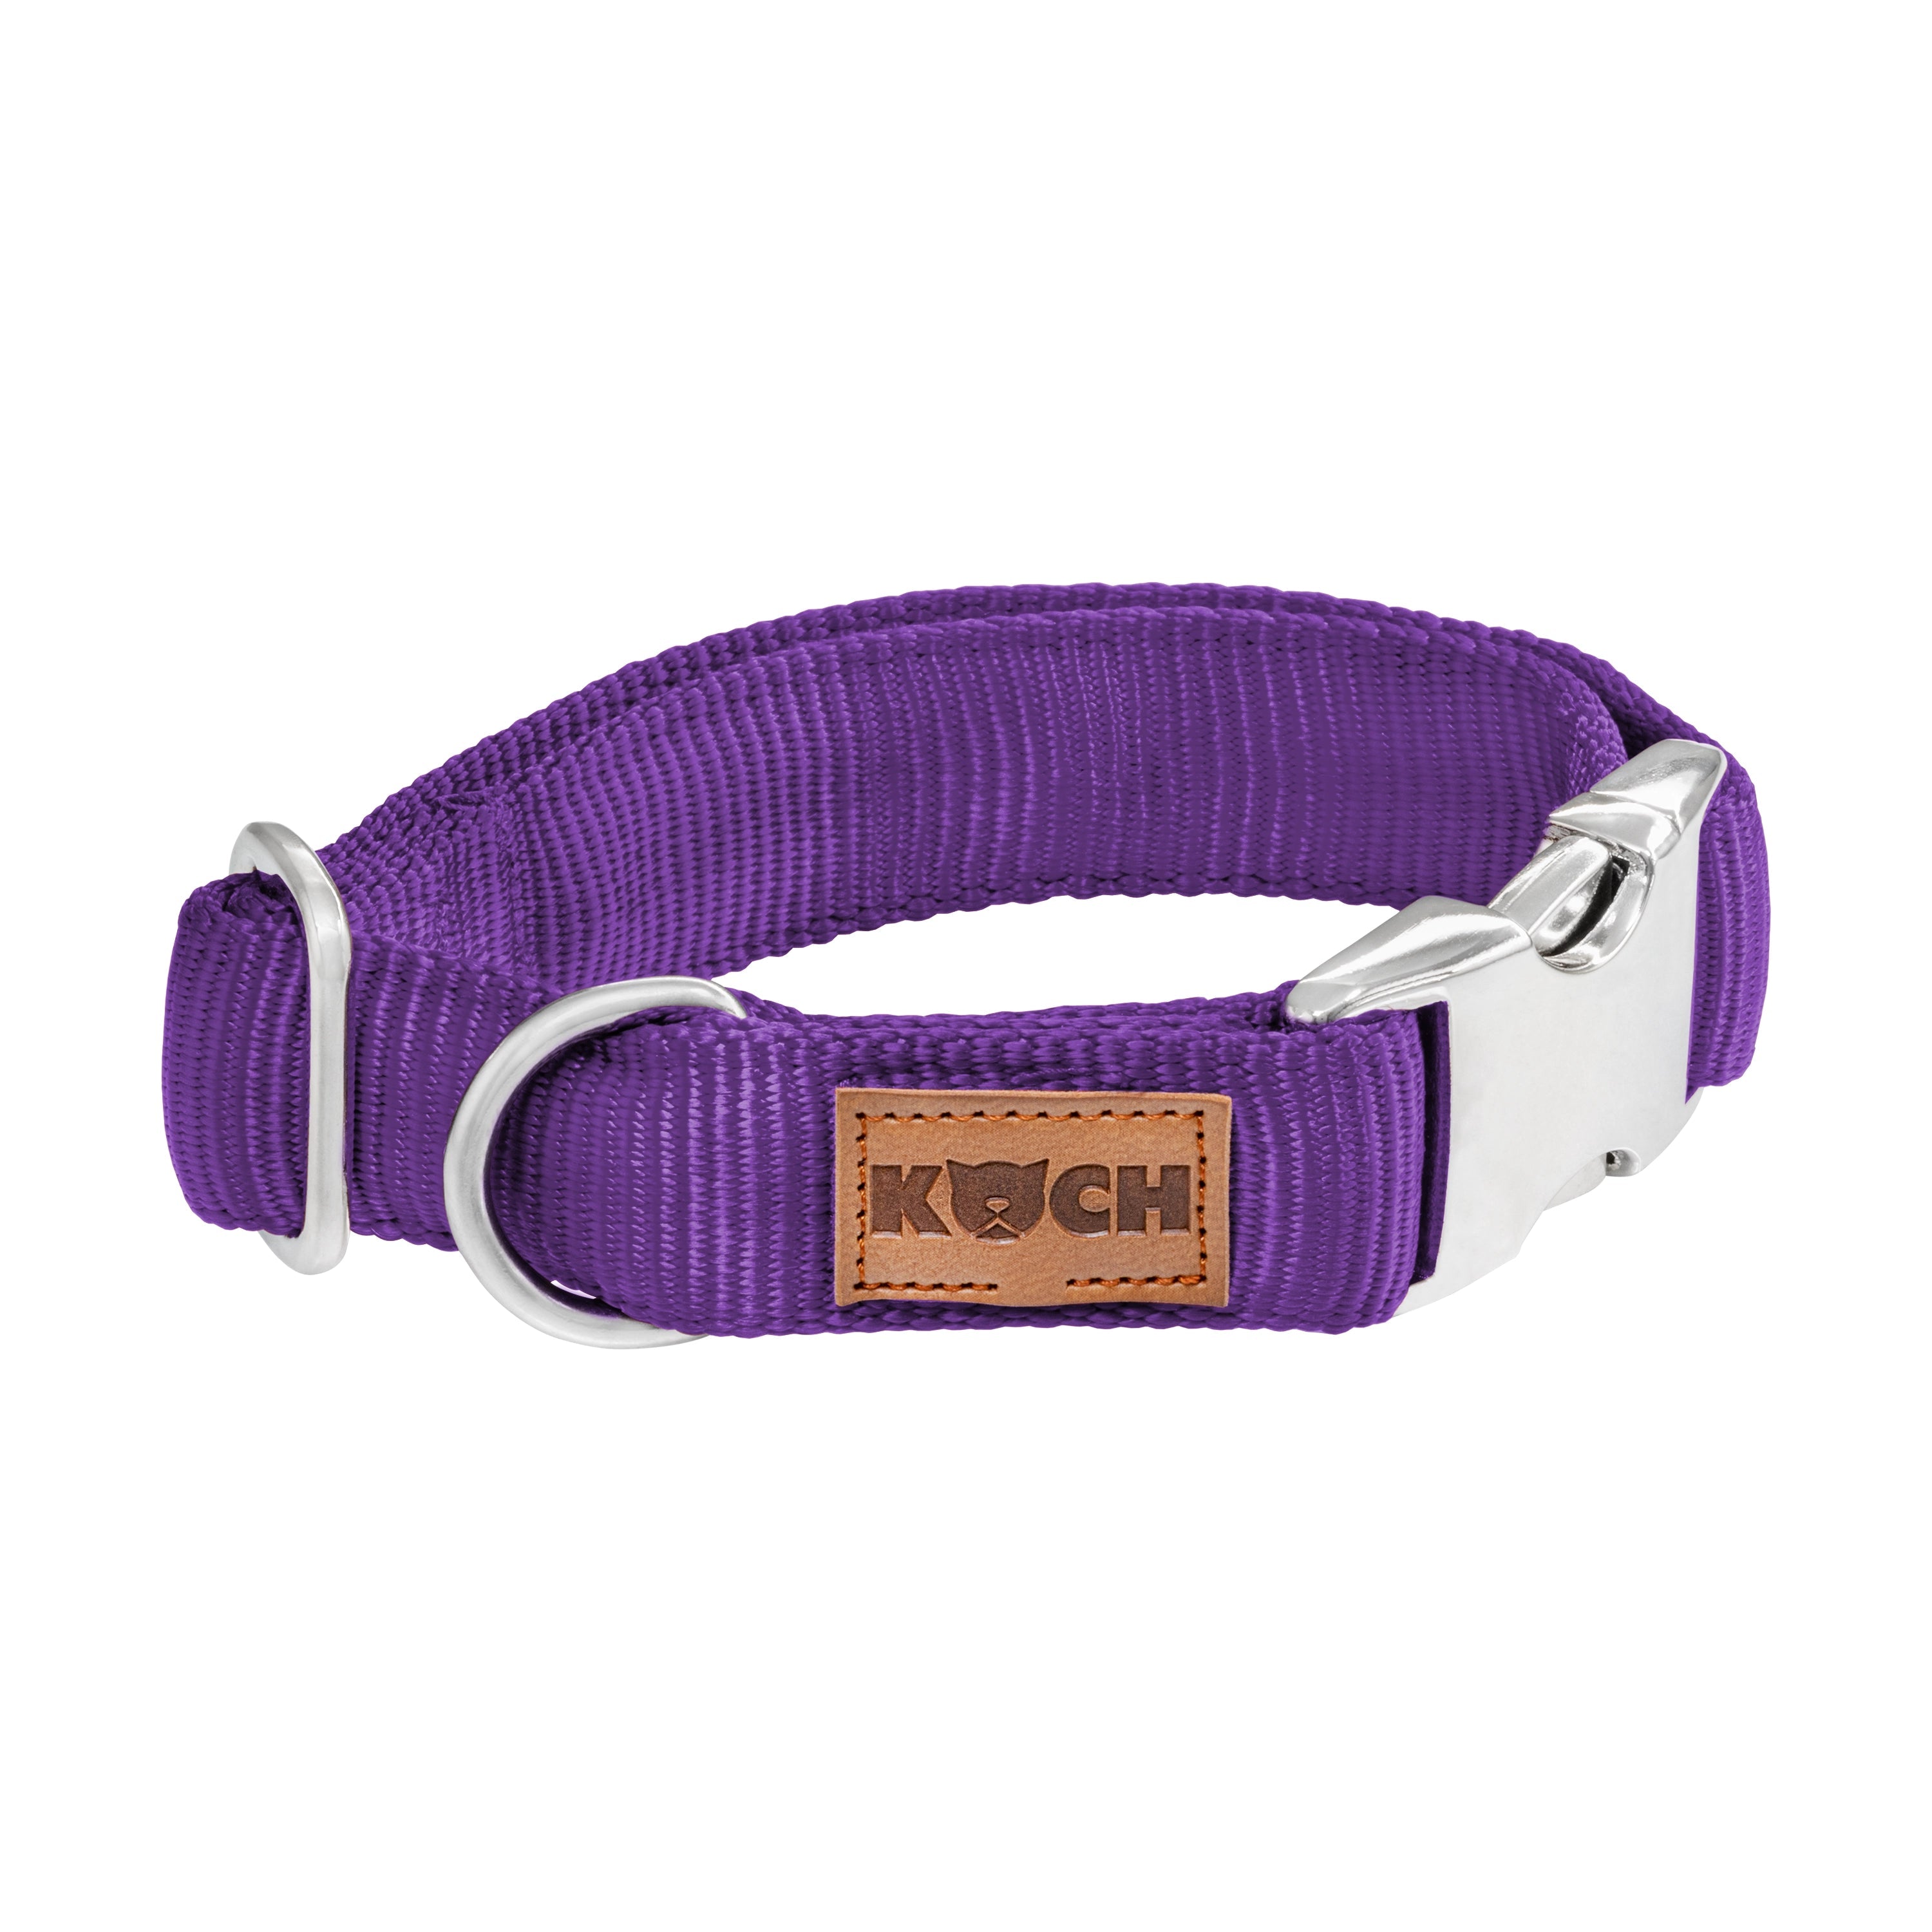 KOCH Premium Alu-Klick Hundehalsband gepolstert lila #farbe_lila